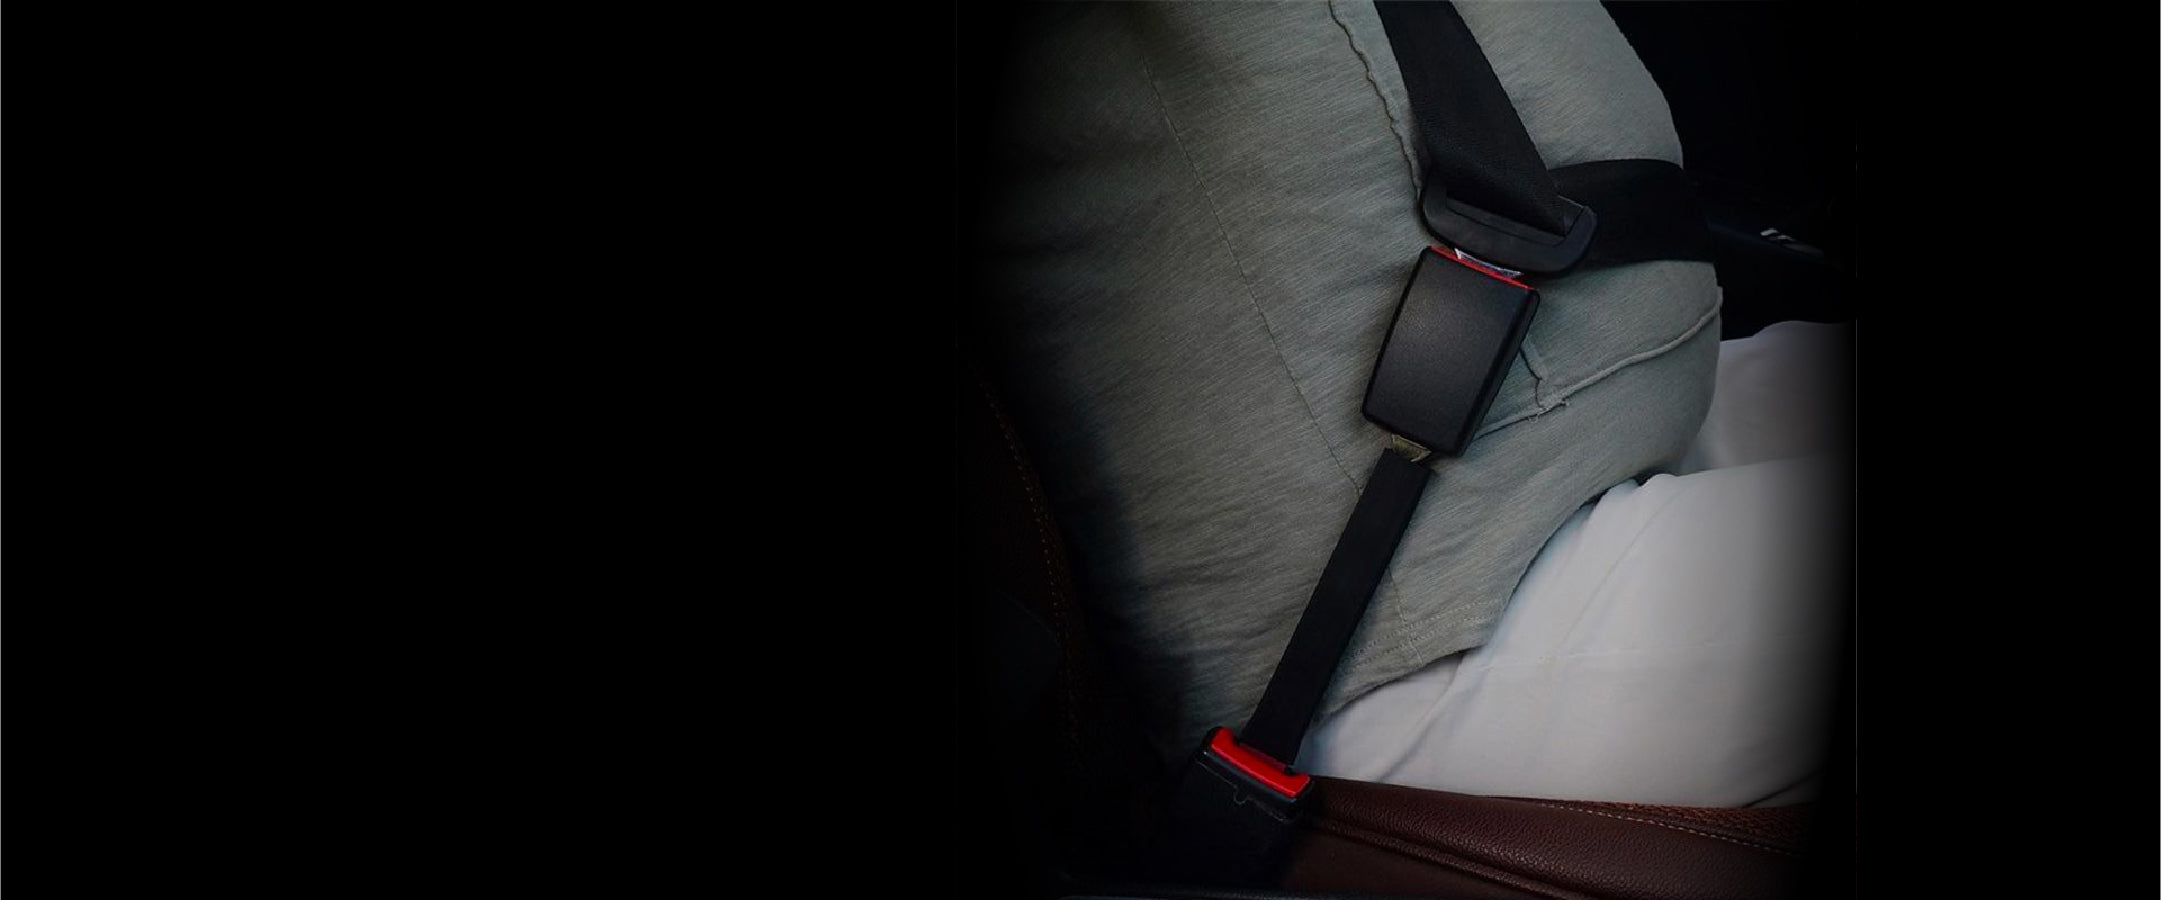 Seat belt buckle extender : r/kia